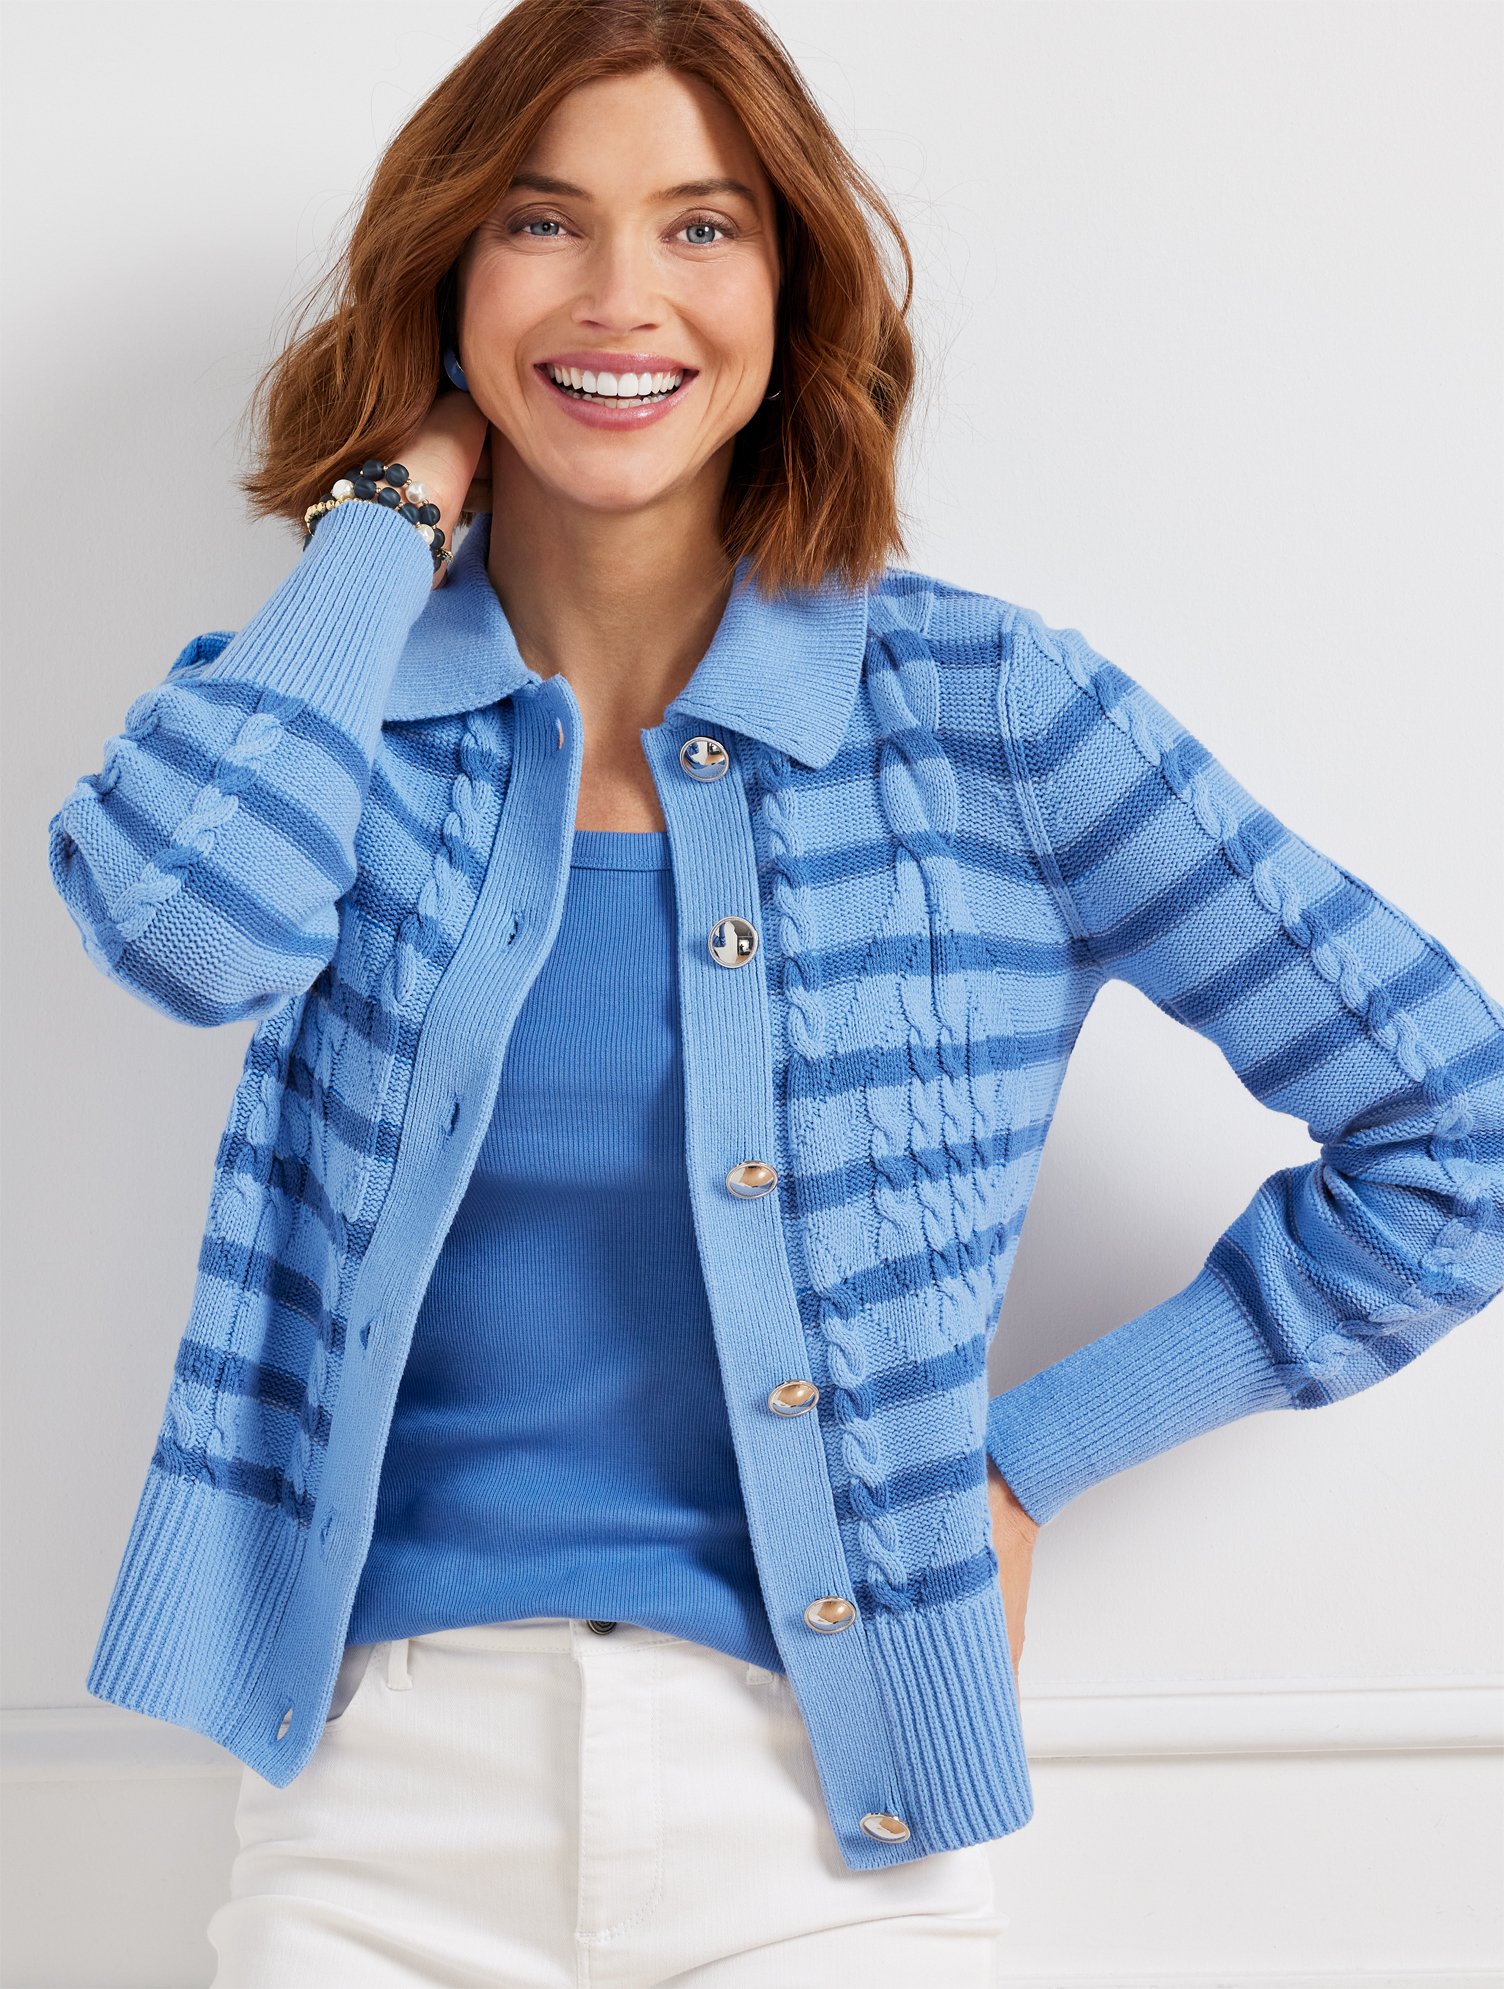 Talbots Cable Knit Collared Cardigan Sweater - Stripe - Laguna Blue - 1x